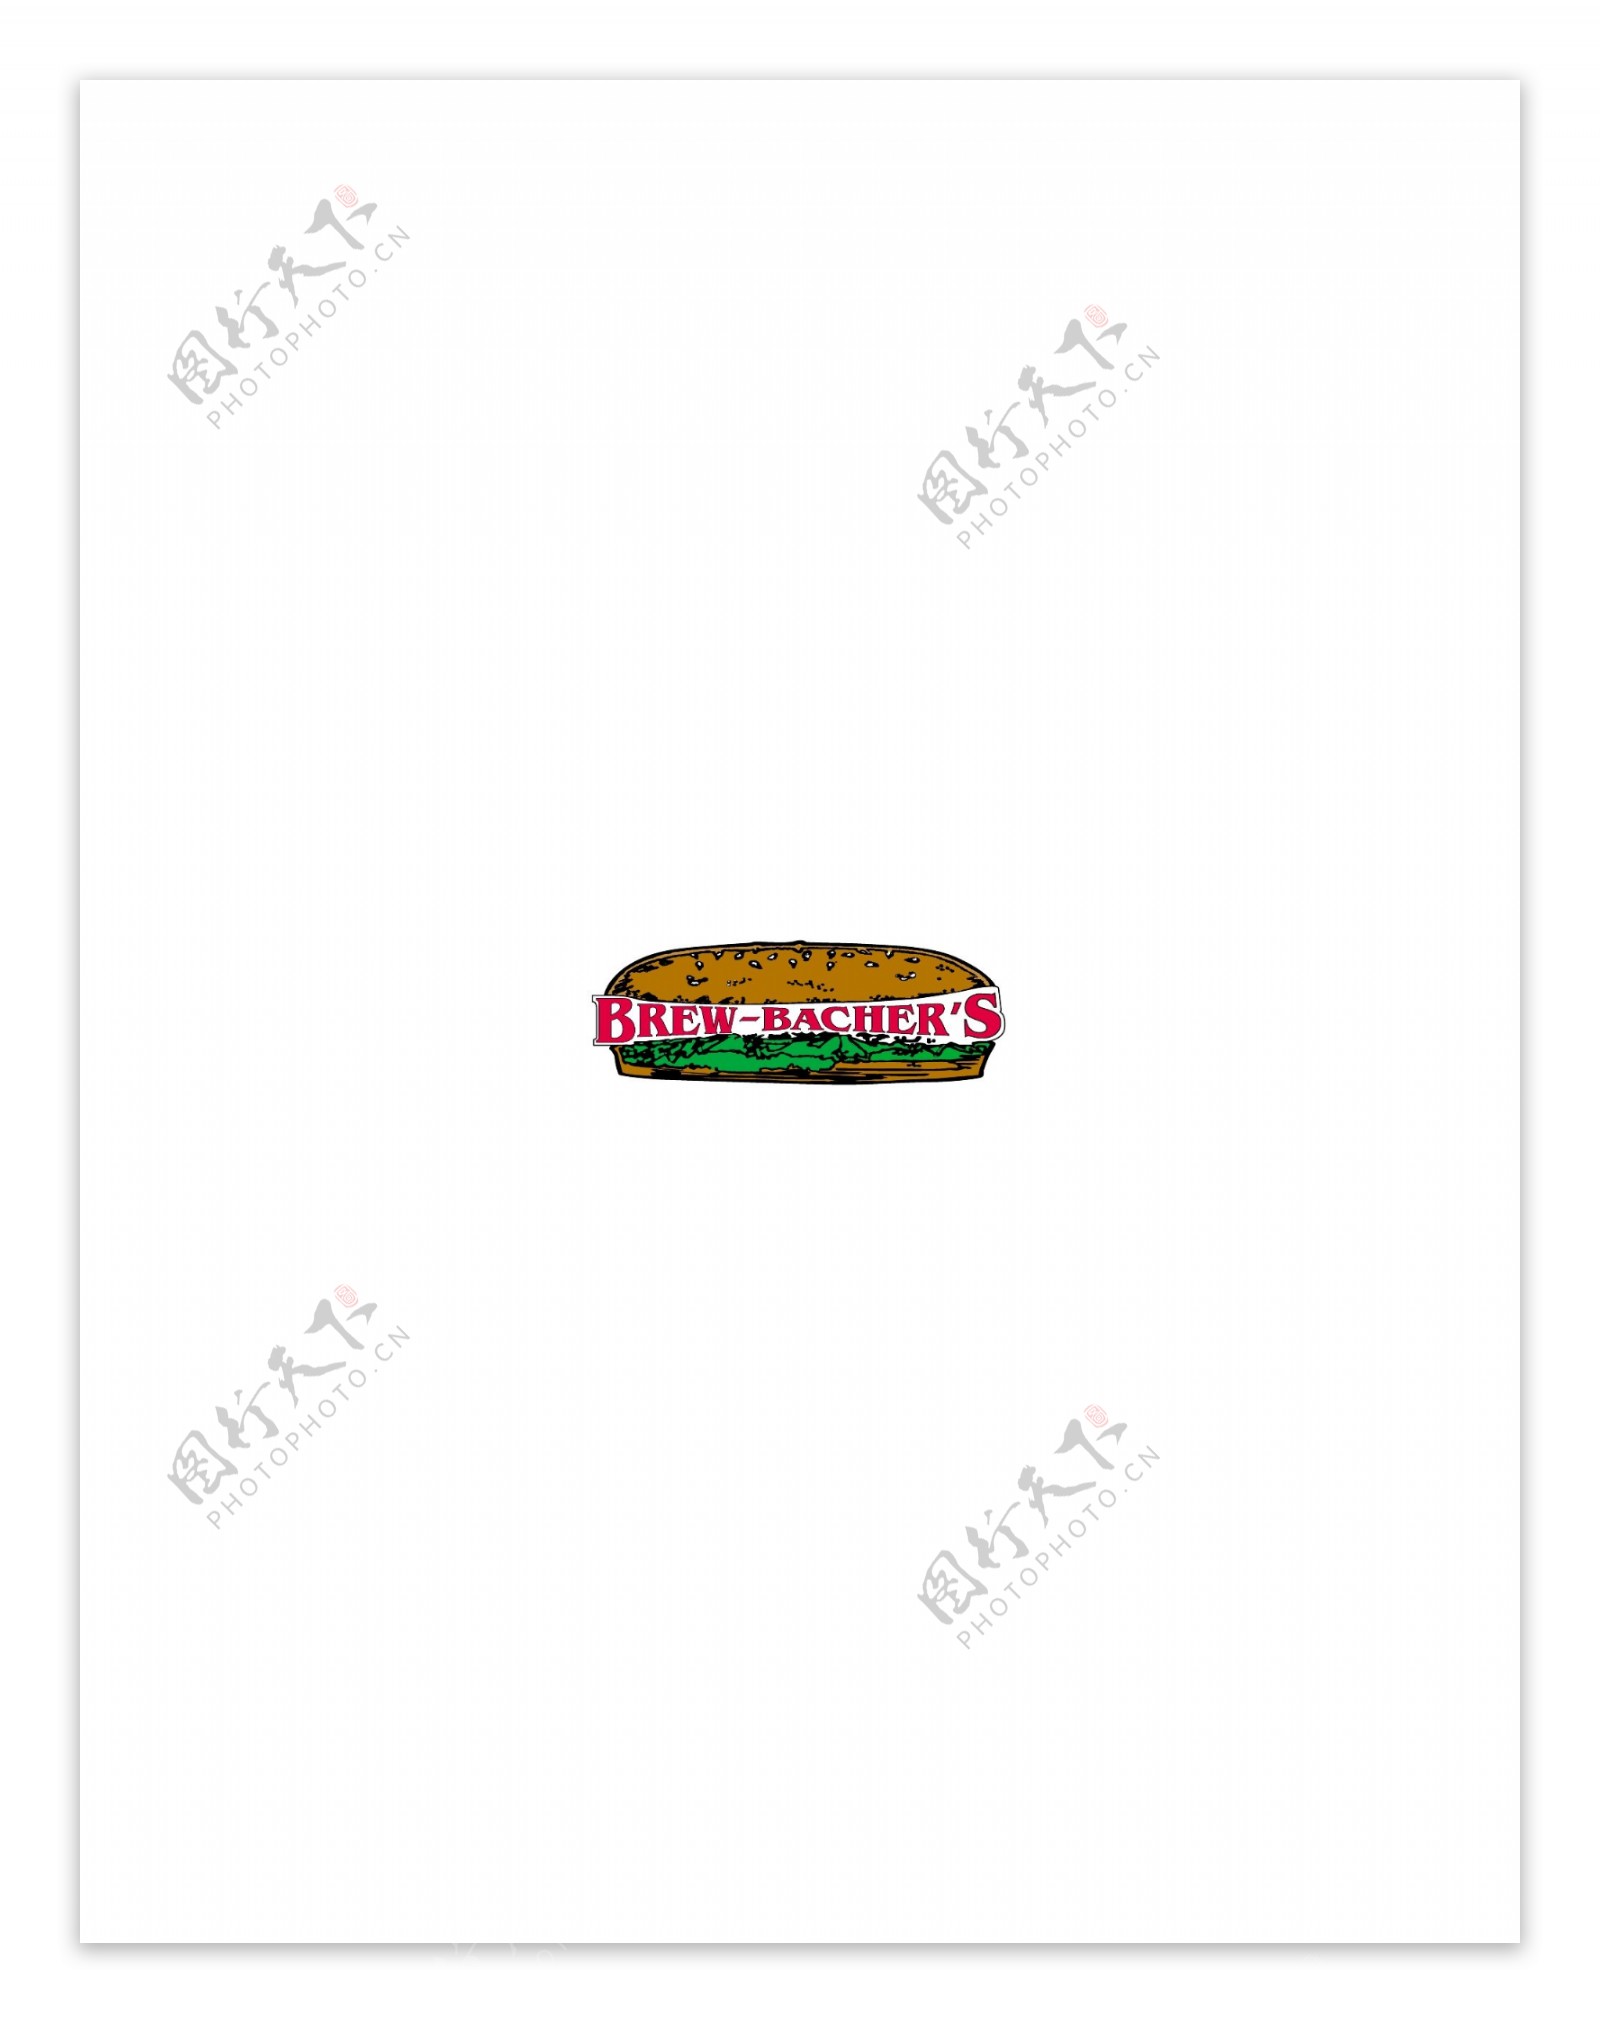 BrewBacherslogo设计欣赏BrewBachers名牌食品标志下载标志设计欣赏